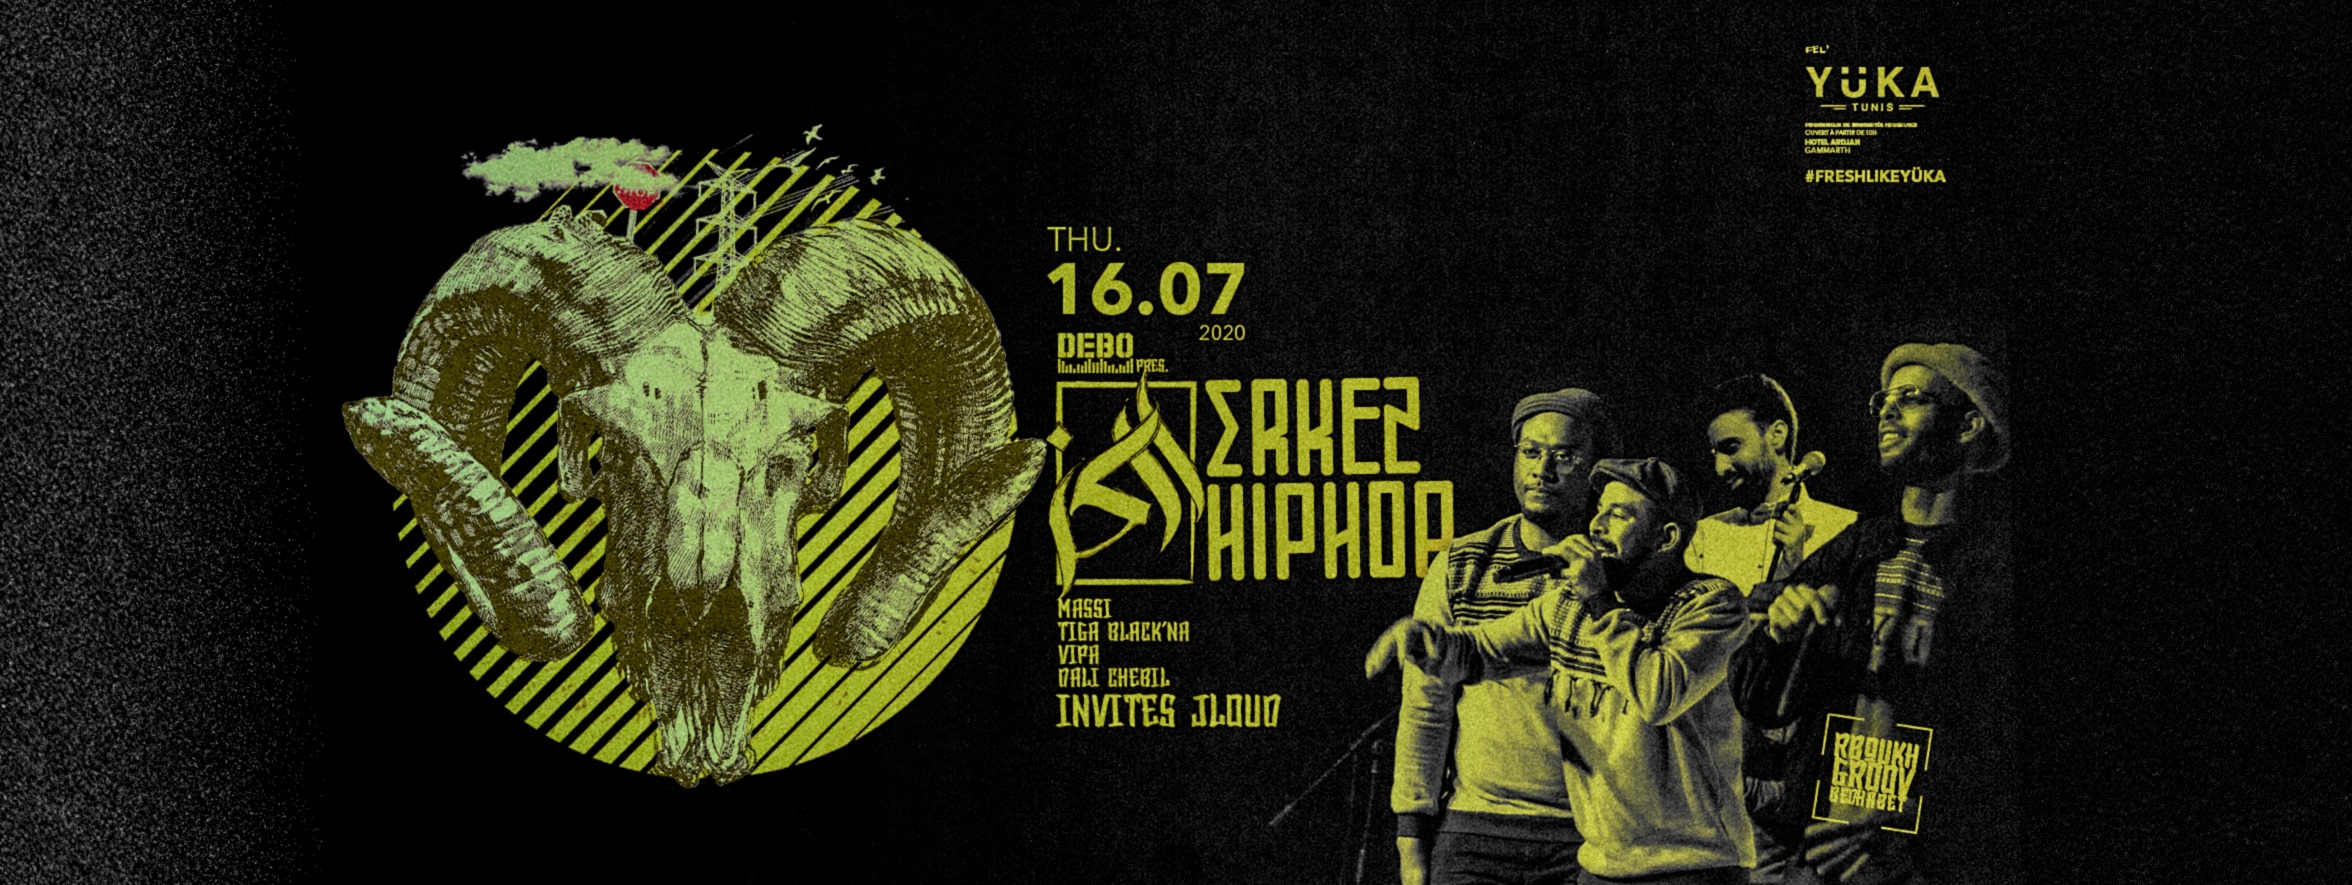 Erkez Hiphop invites Jloud fil Yüka post thumbnail image